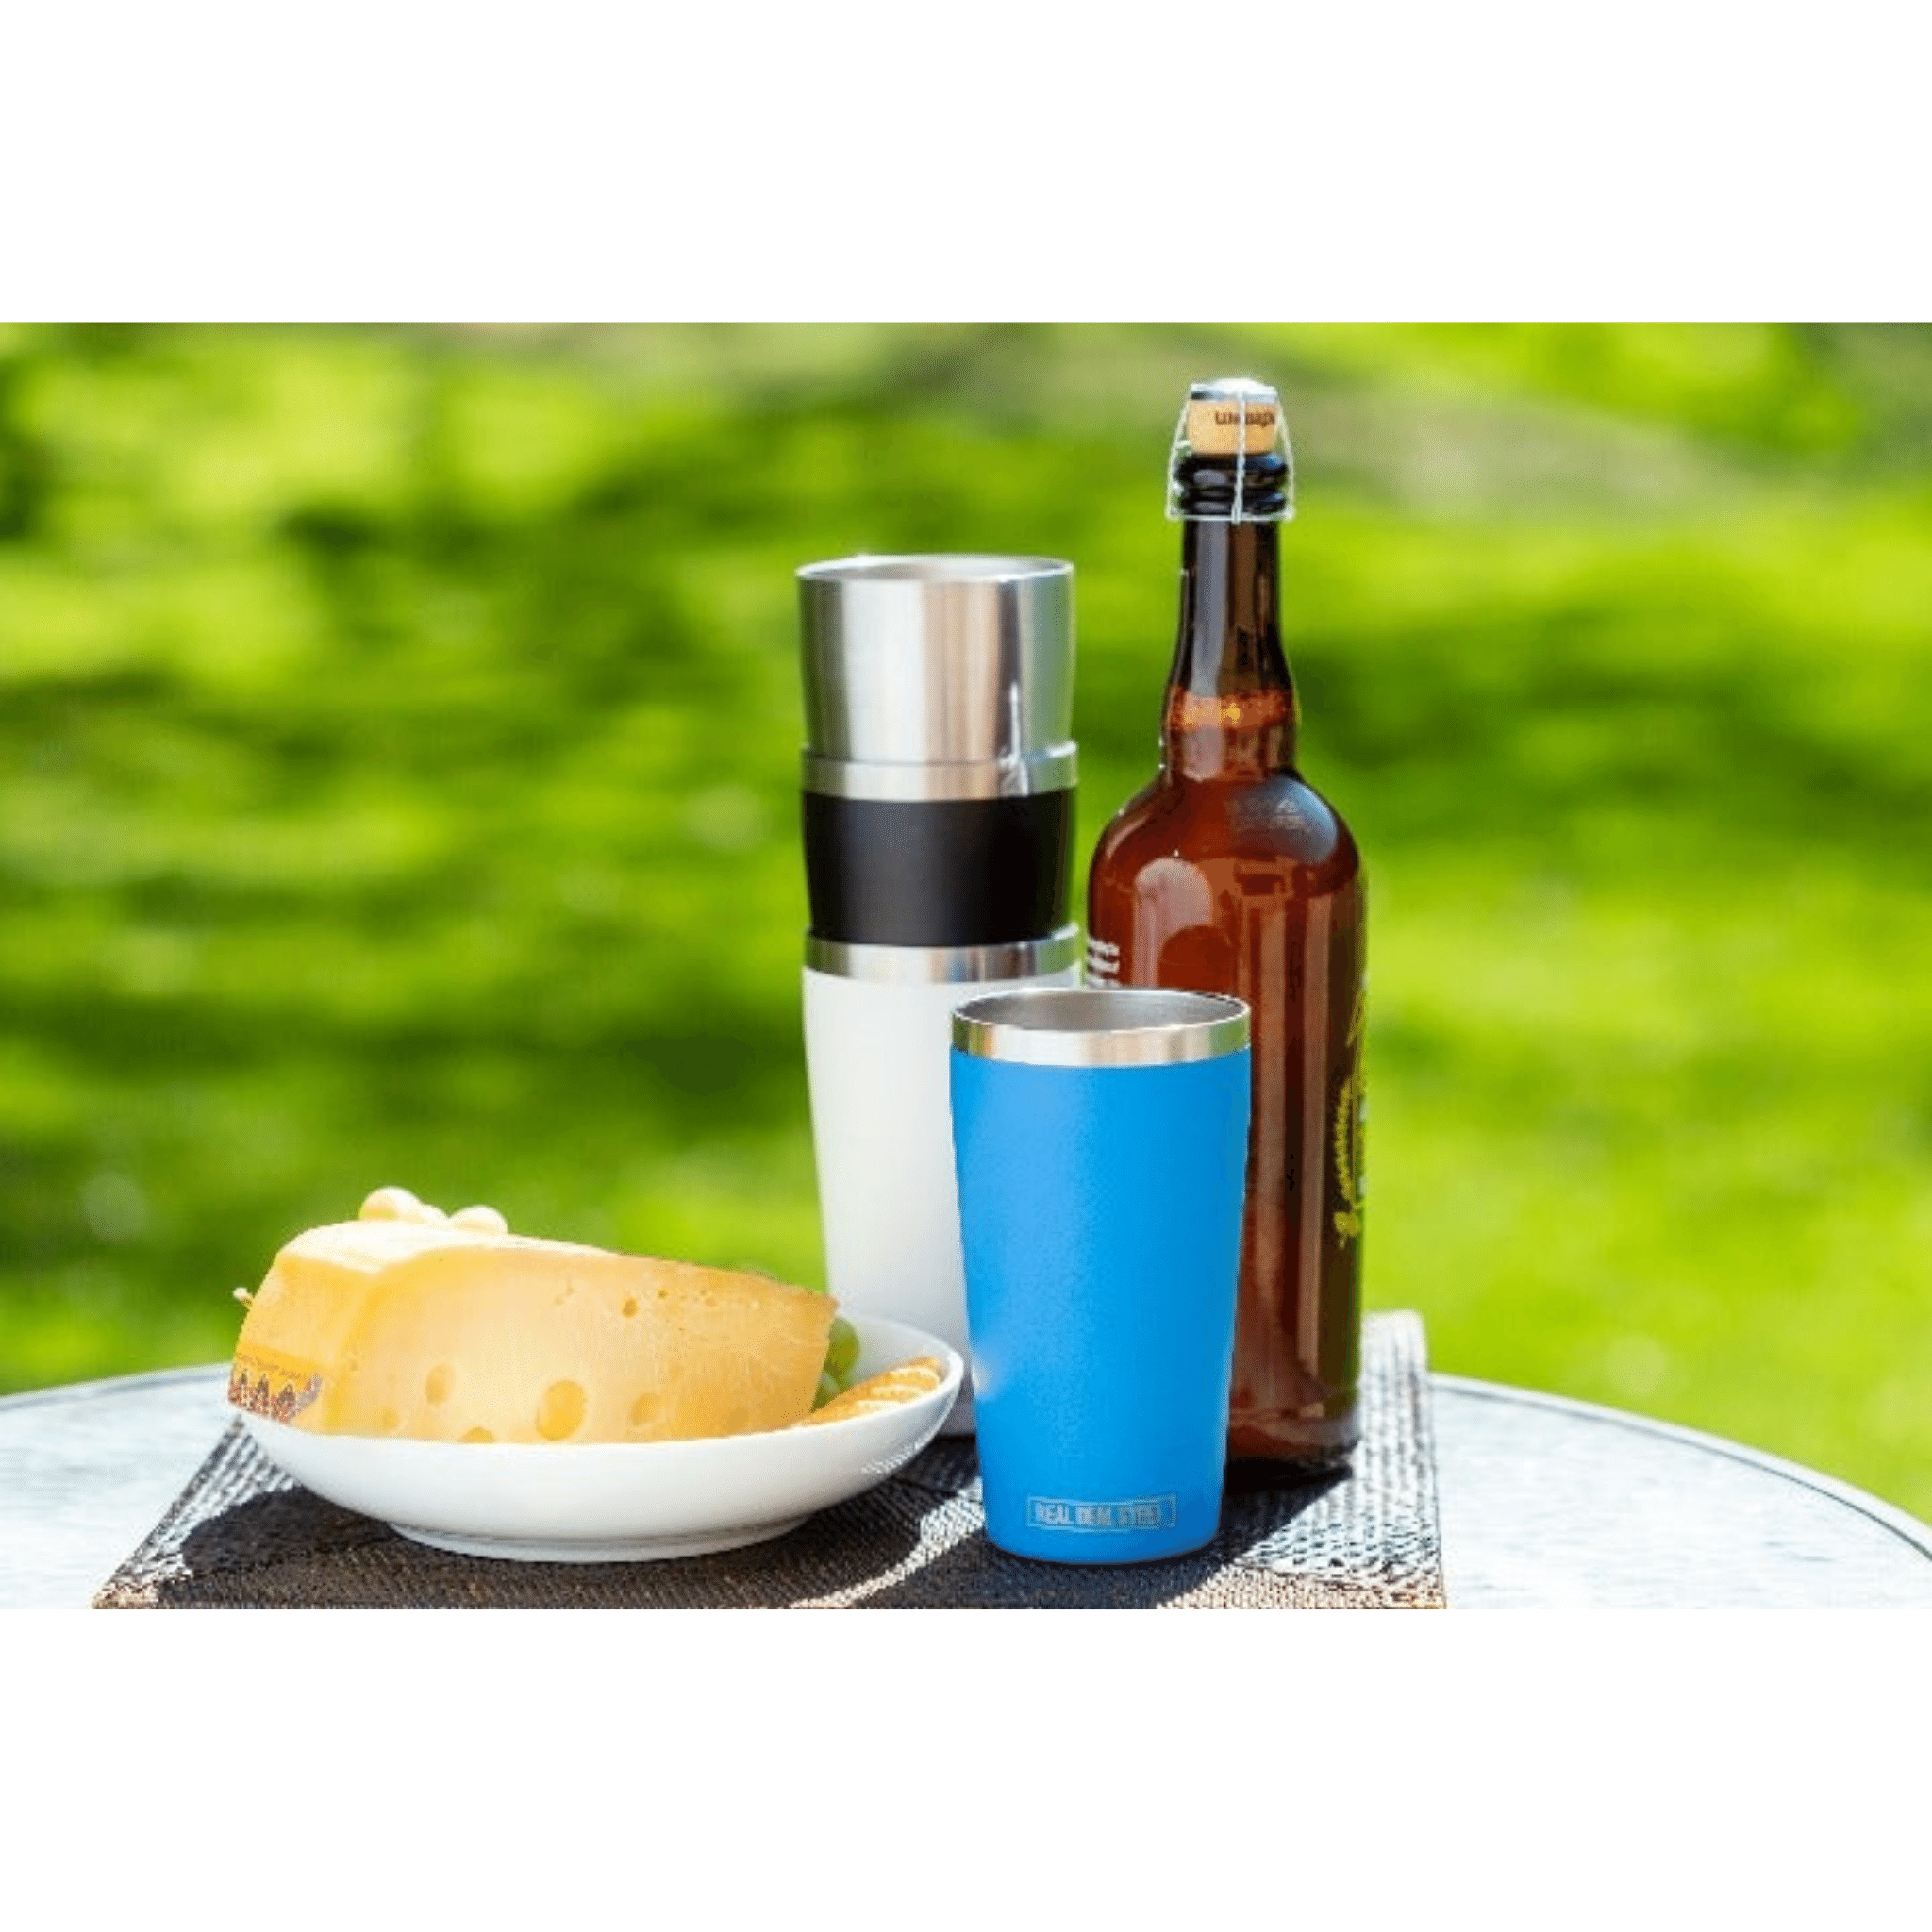 Stainless Steel Cup 10 oz. Tumbler Set Good for Beer, Water, or drinks -  Wealers